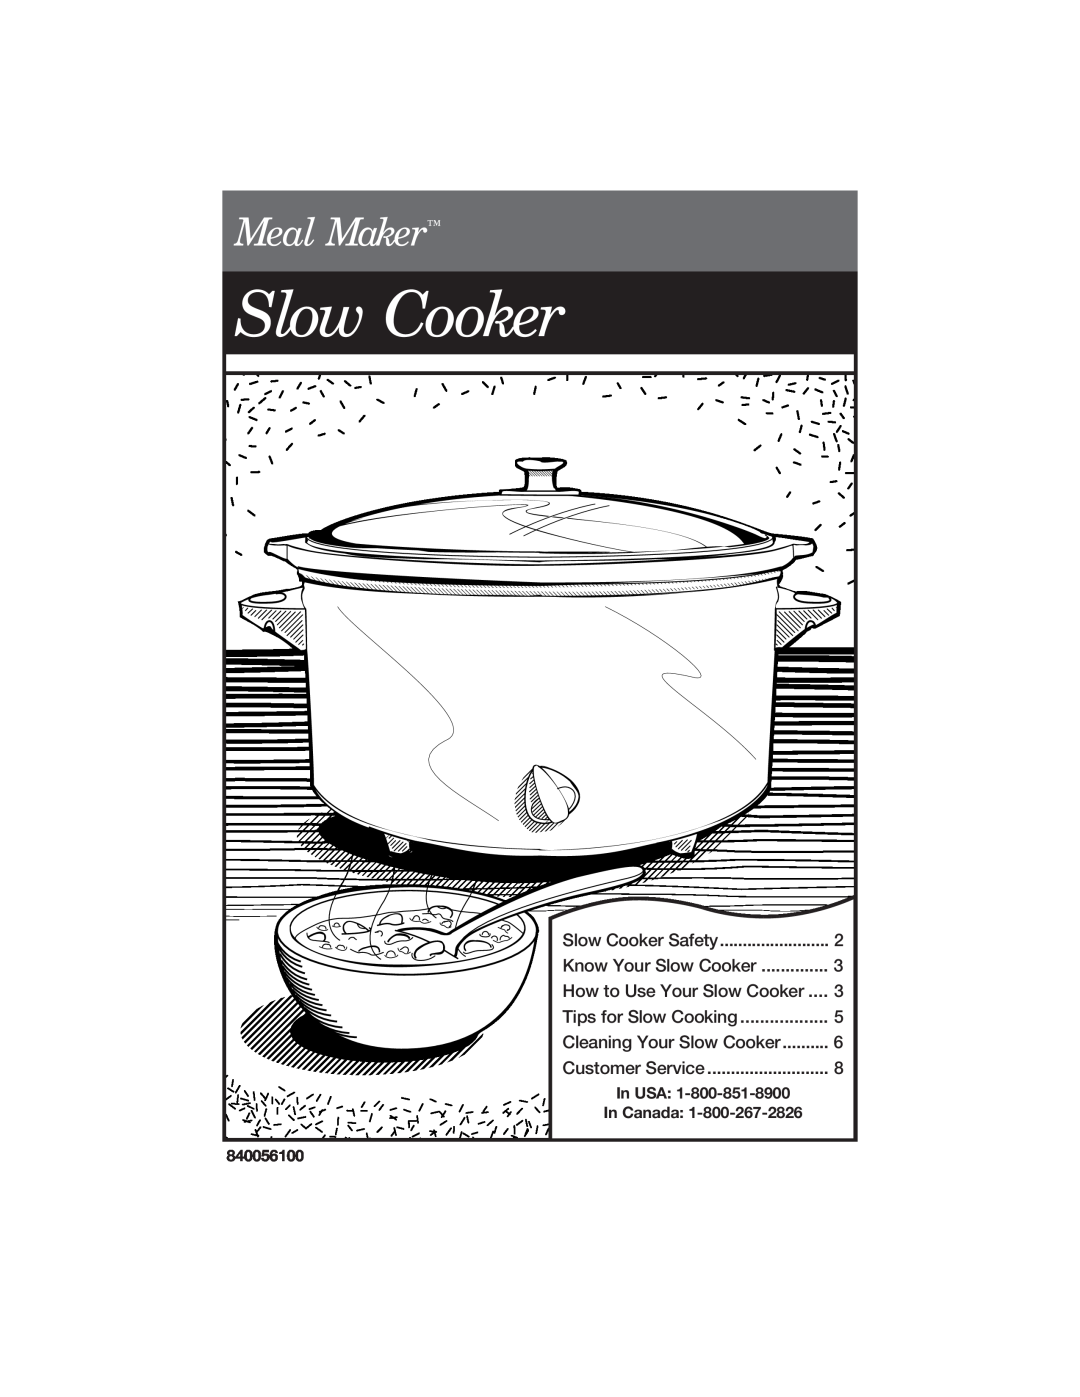 Hamilton Beach 840056100 manual Slow Cooker, Meal Maker 